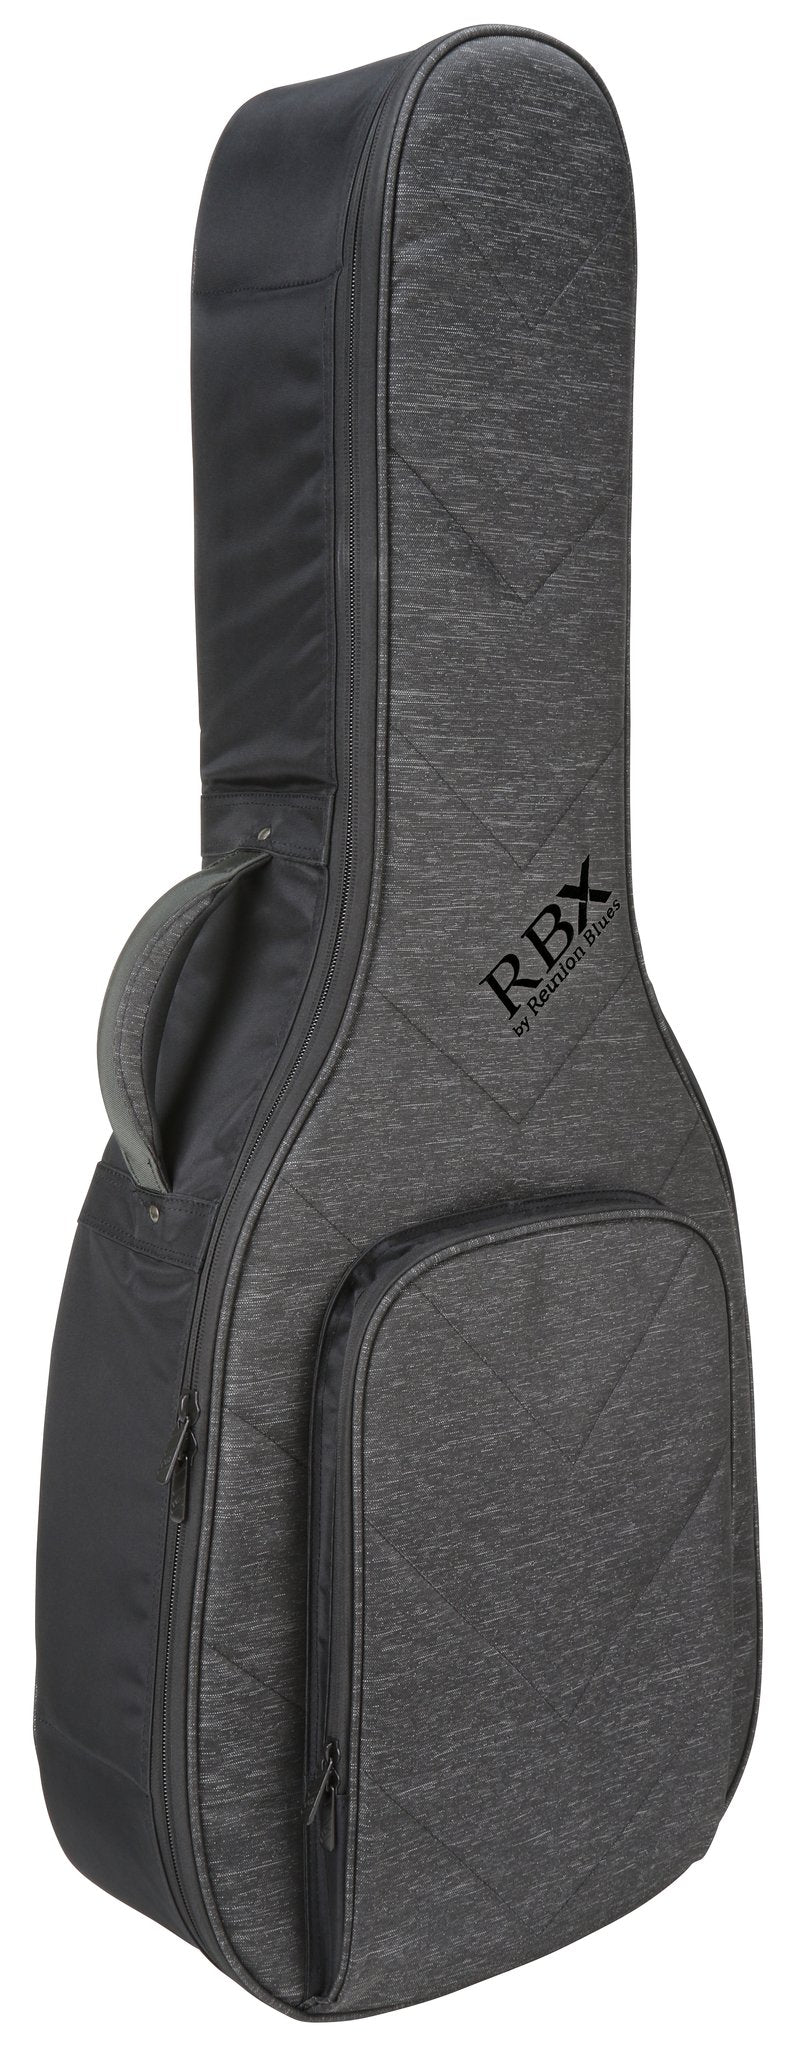 Reunion Blues, RBX Oxford Small Body Acoustic Guitar Bag RBXOC3 木結他袋